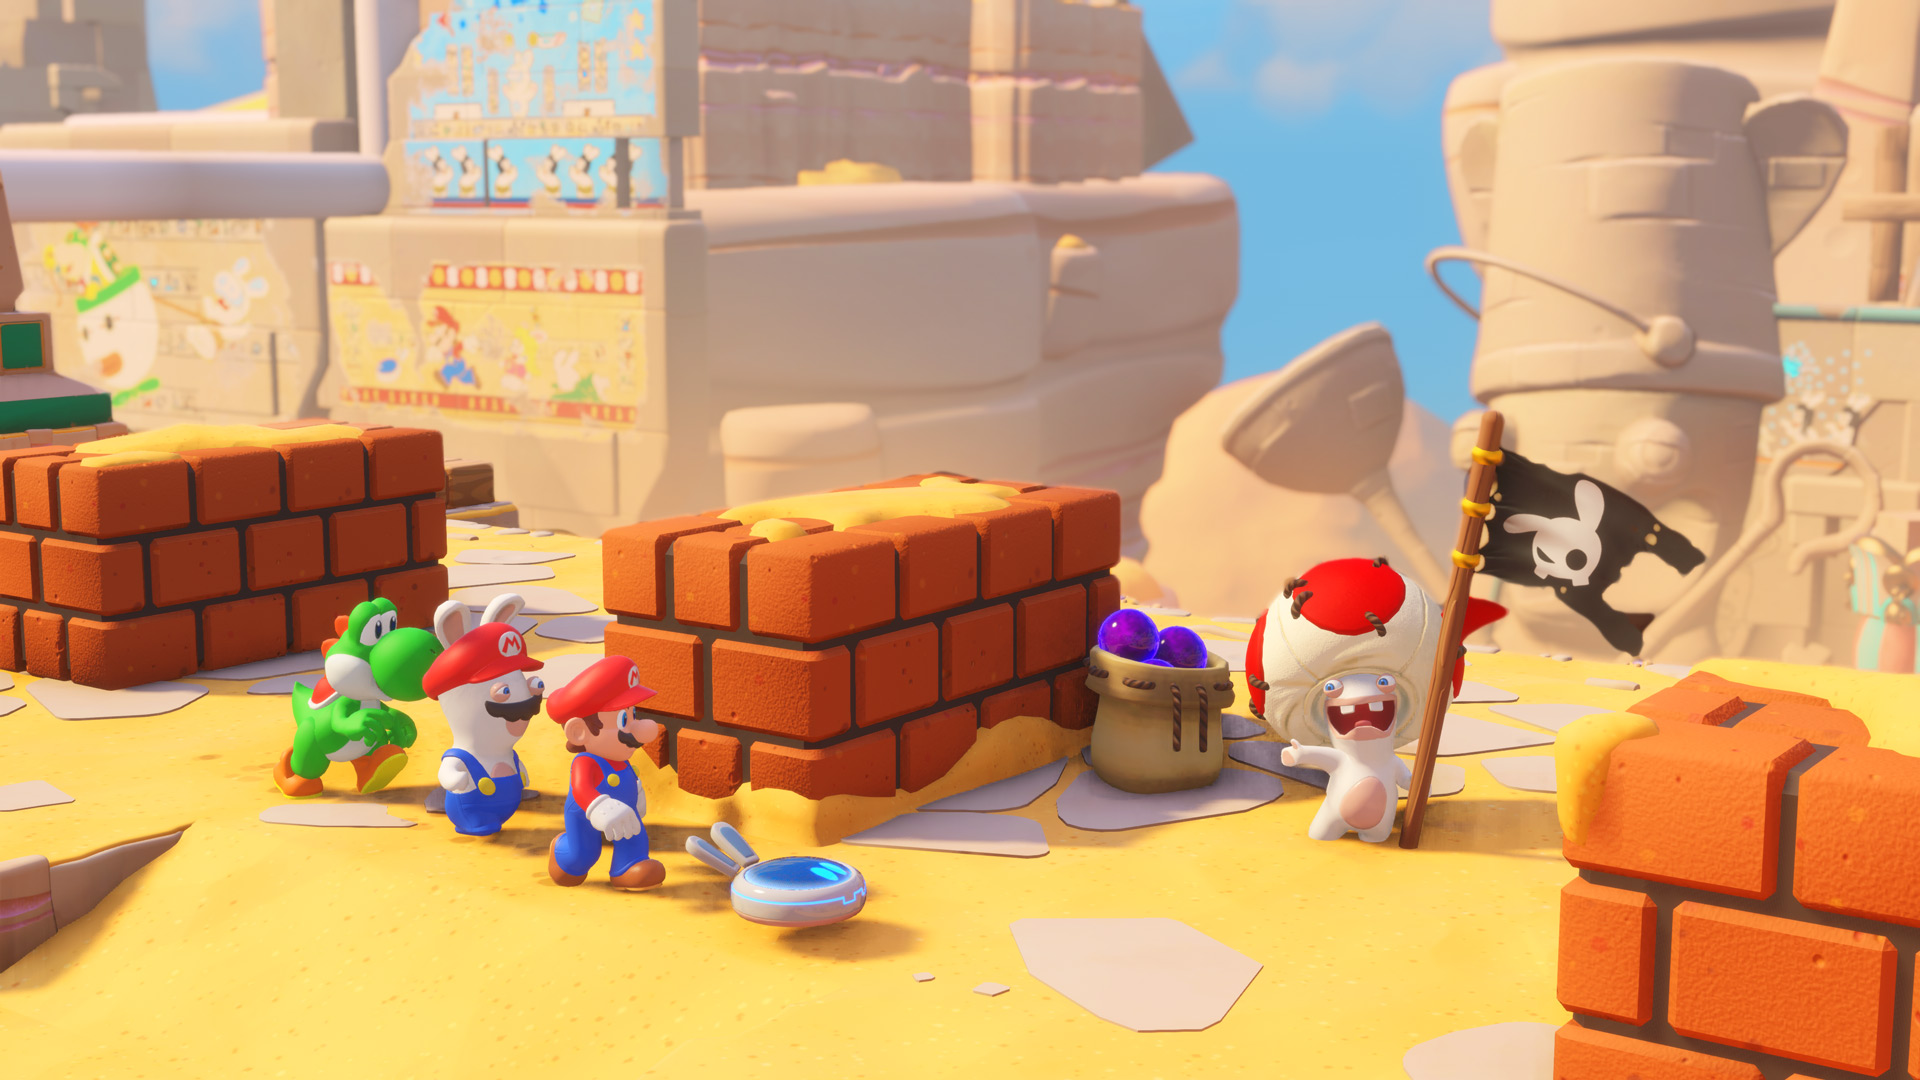 Mario leads Rabbid Mario and Yoshi towards a Rabbid Toad holding a flag — Mario + Rabbids Kingdom Battle